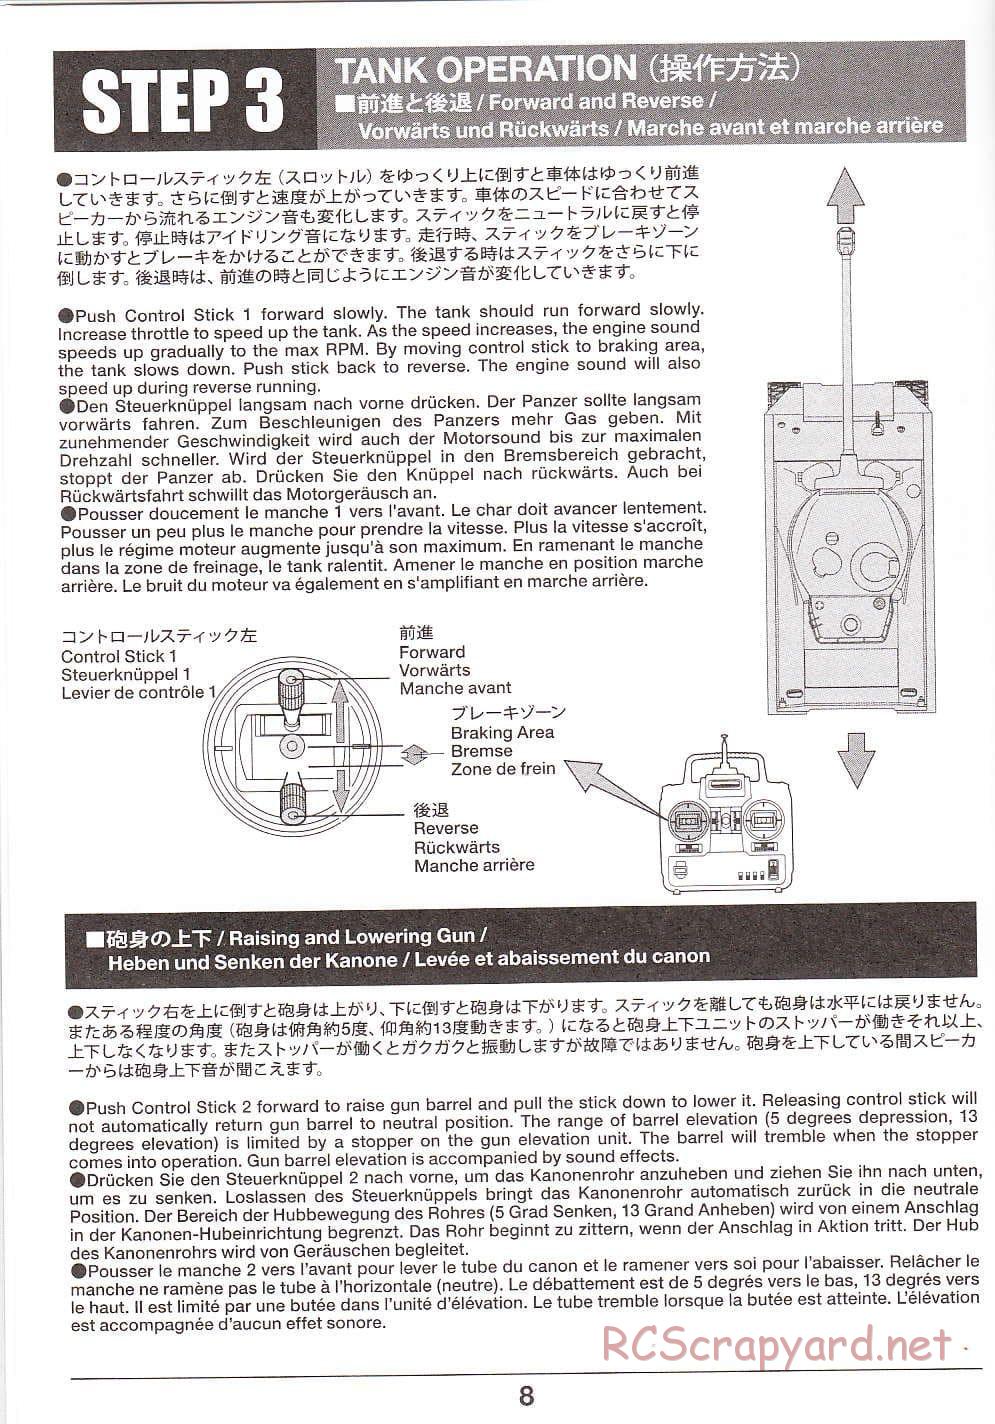 Tamiya - Super Sherman M-51 - 1/16 Scale Chassis - Operation Manual - Page 8